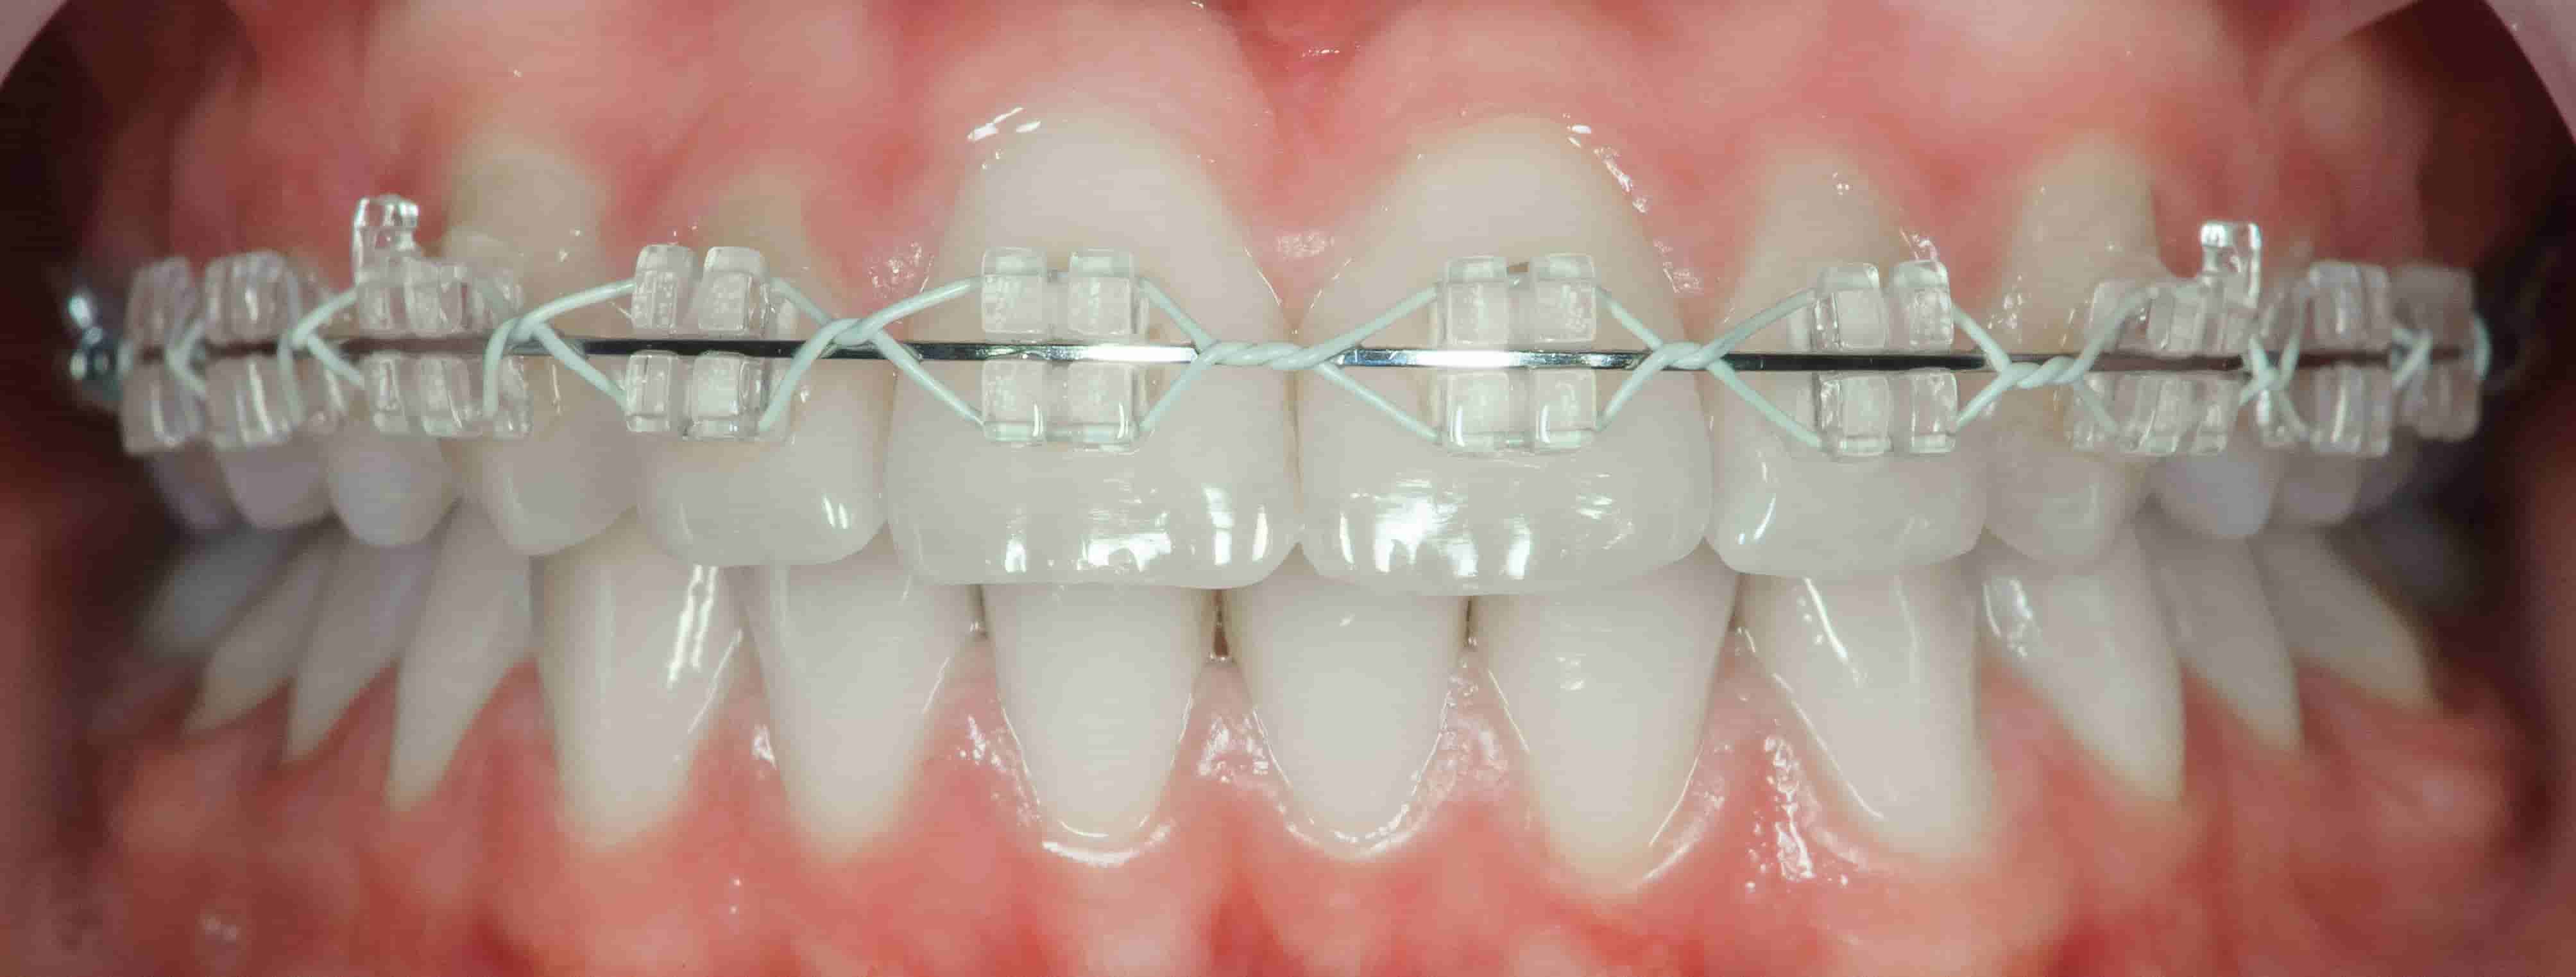 teeth with ceramic braces